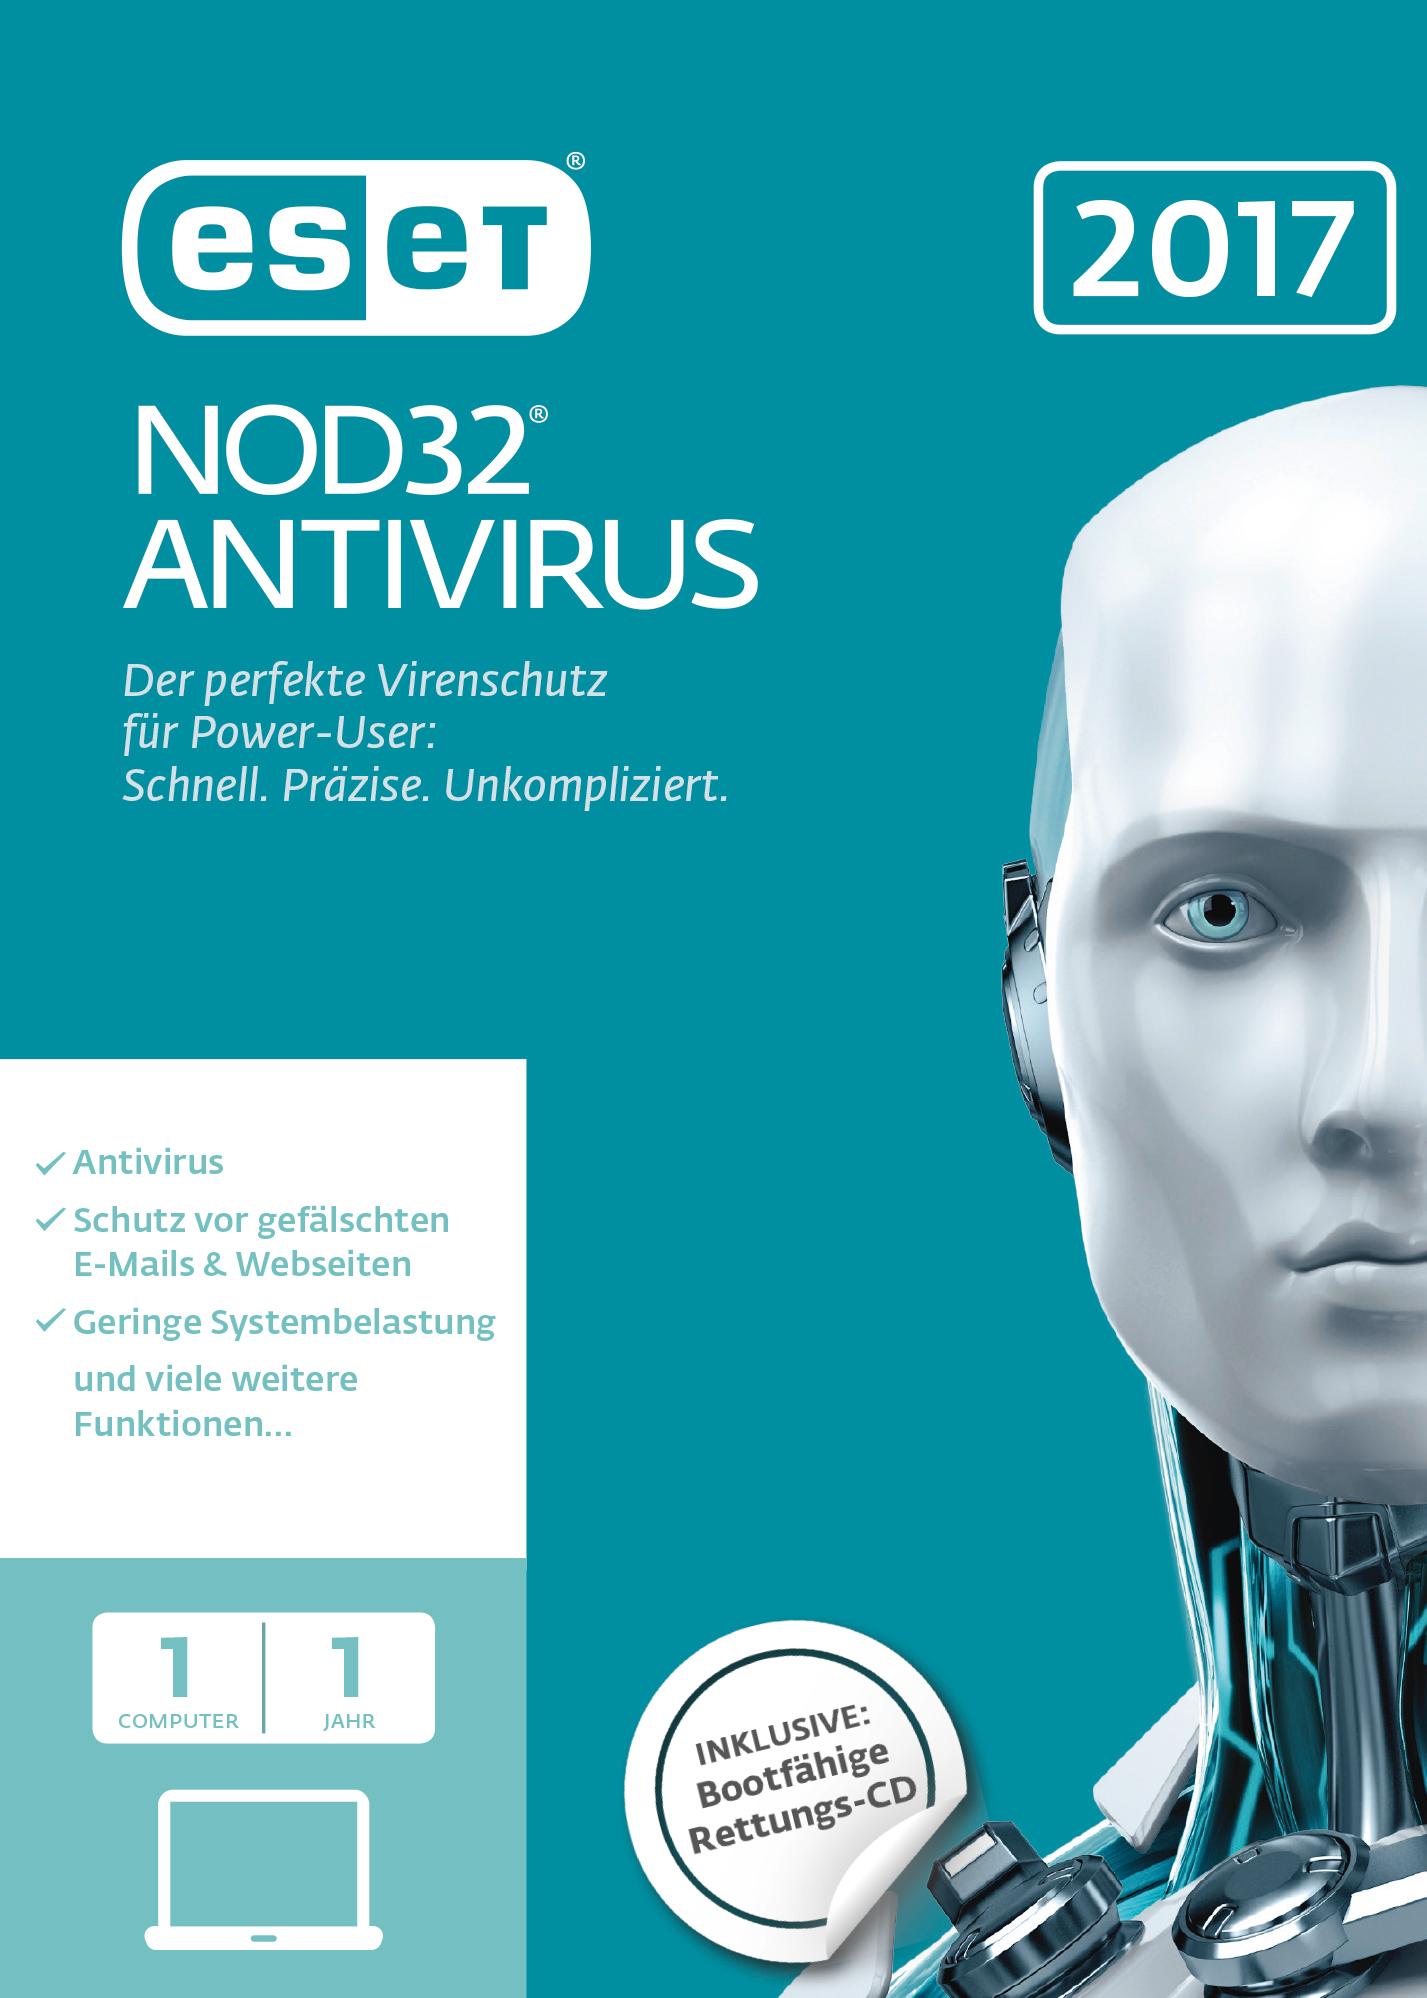 Nod32 antivirus free download 32 bit